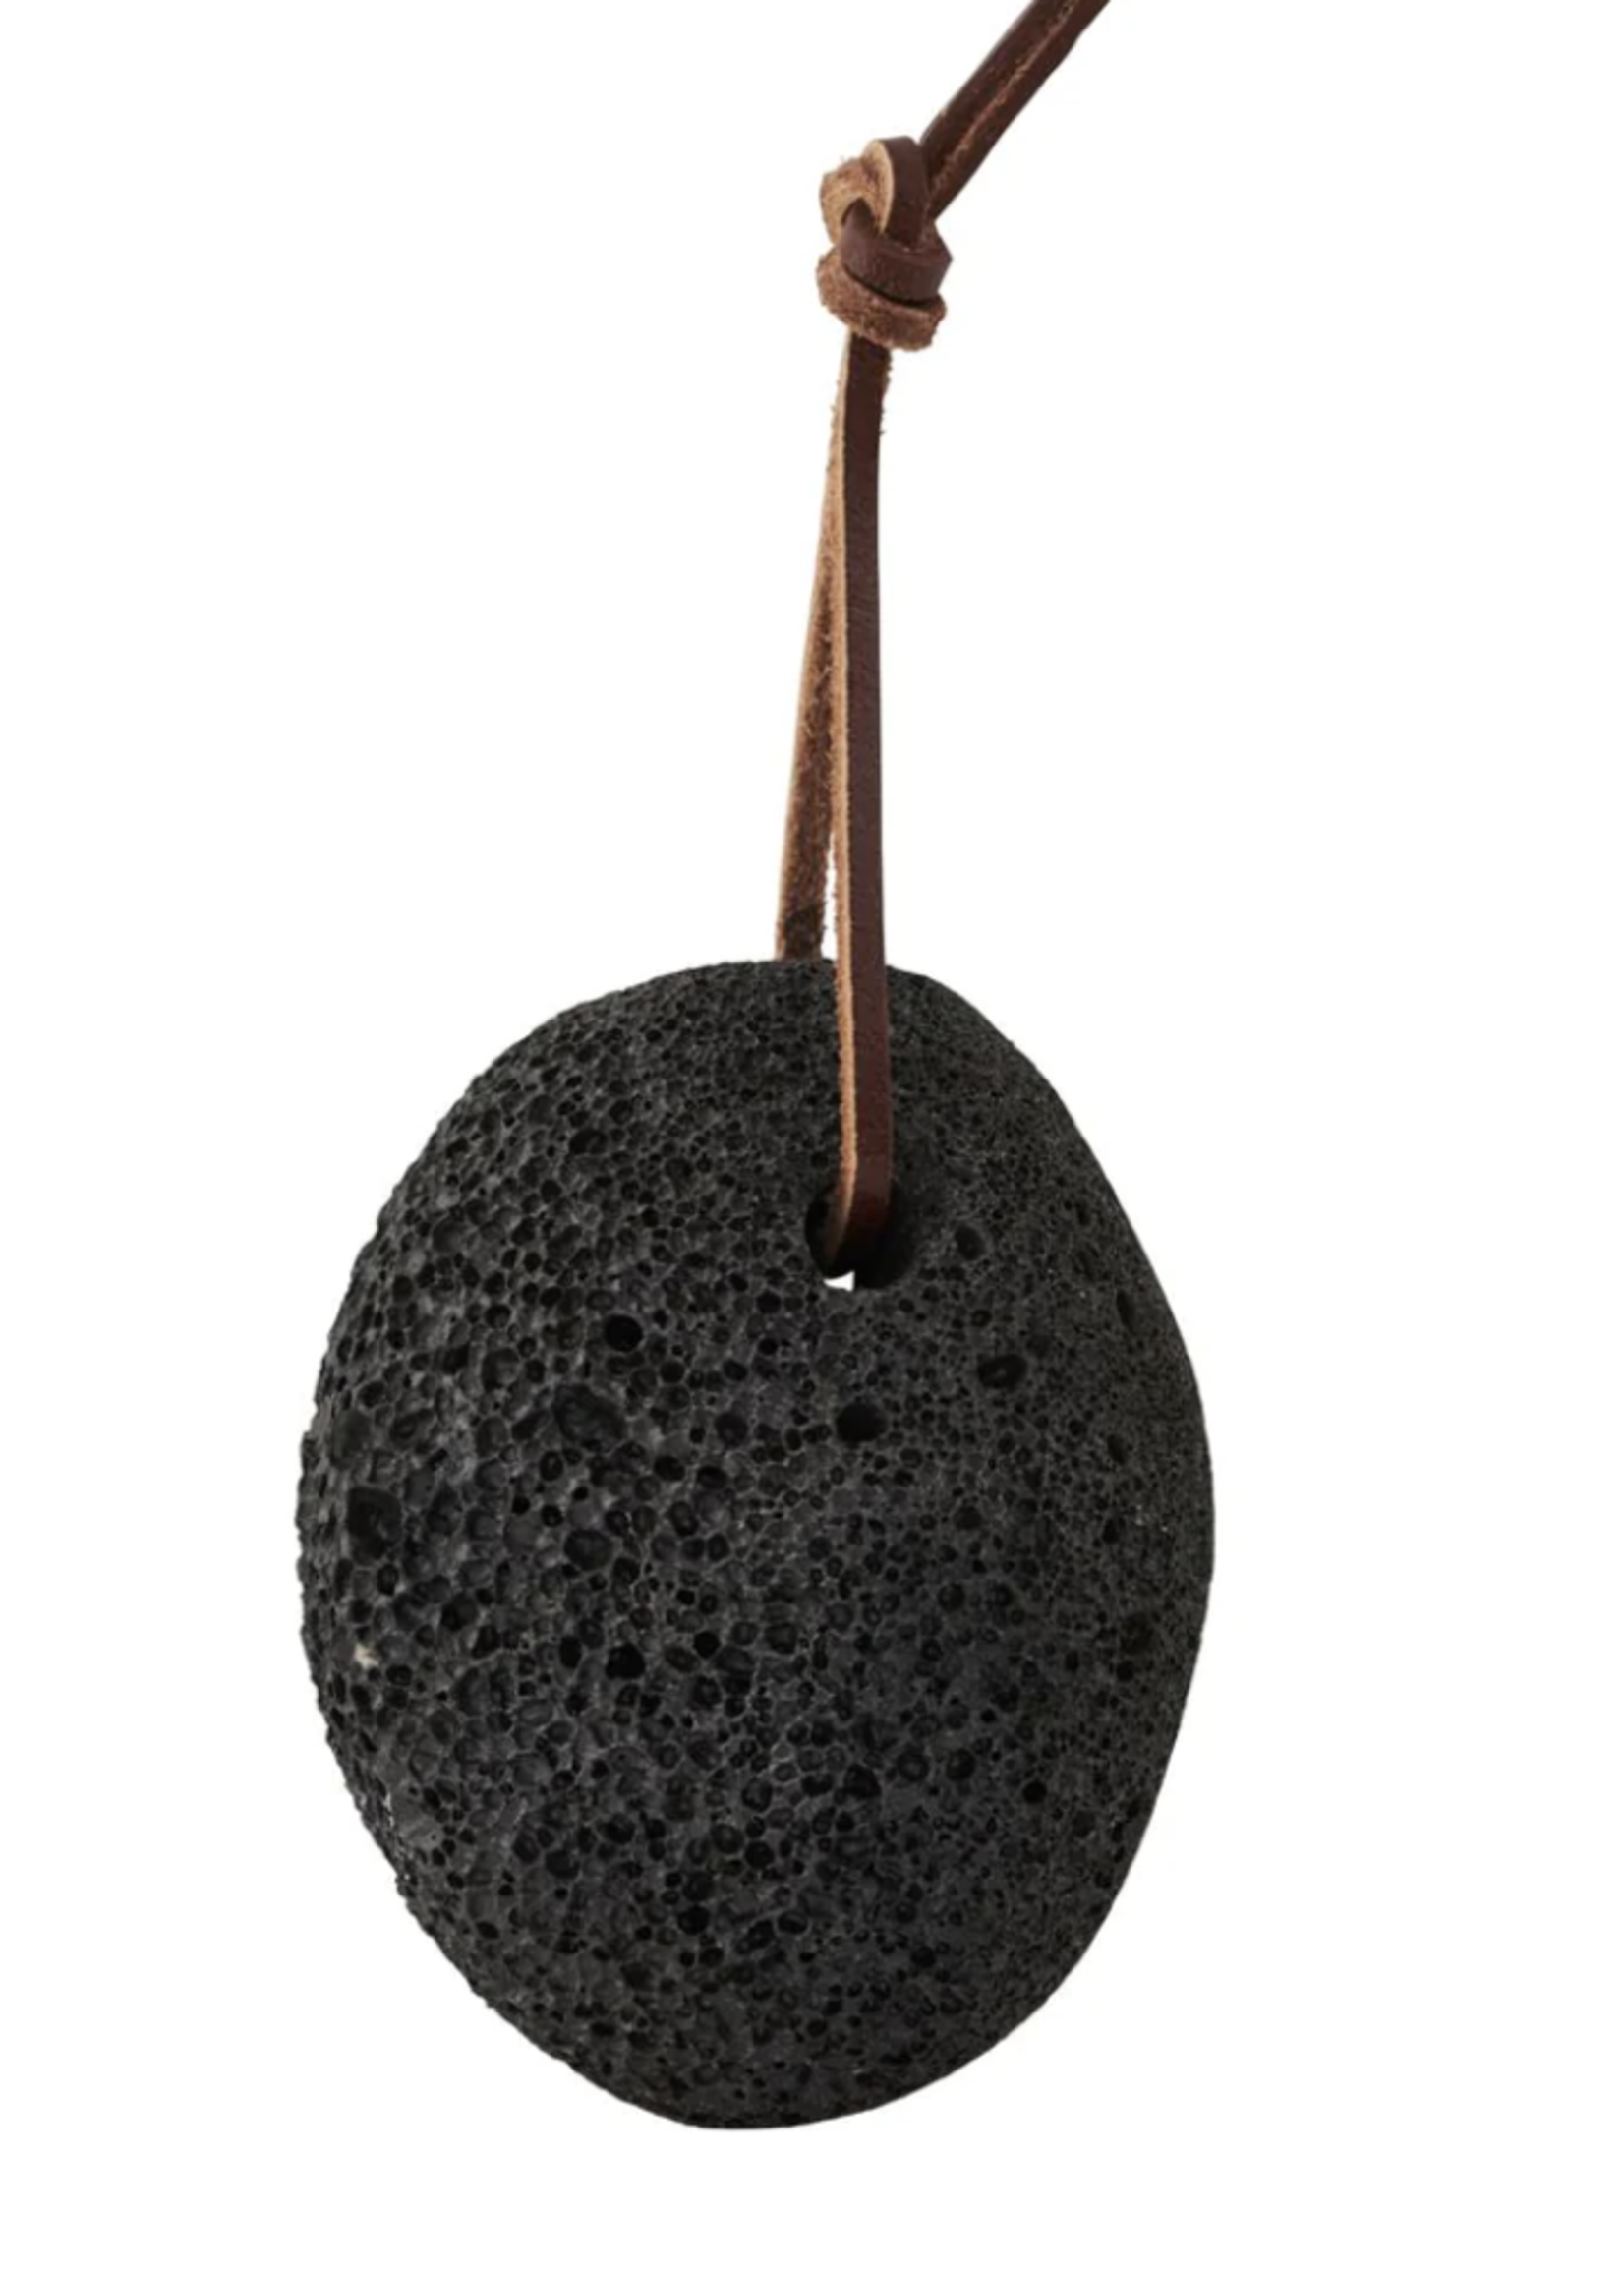 Pumice Stone, Black